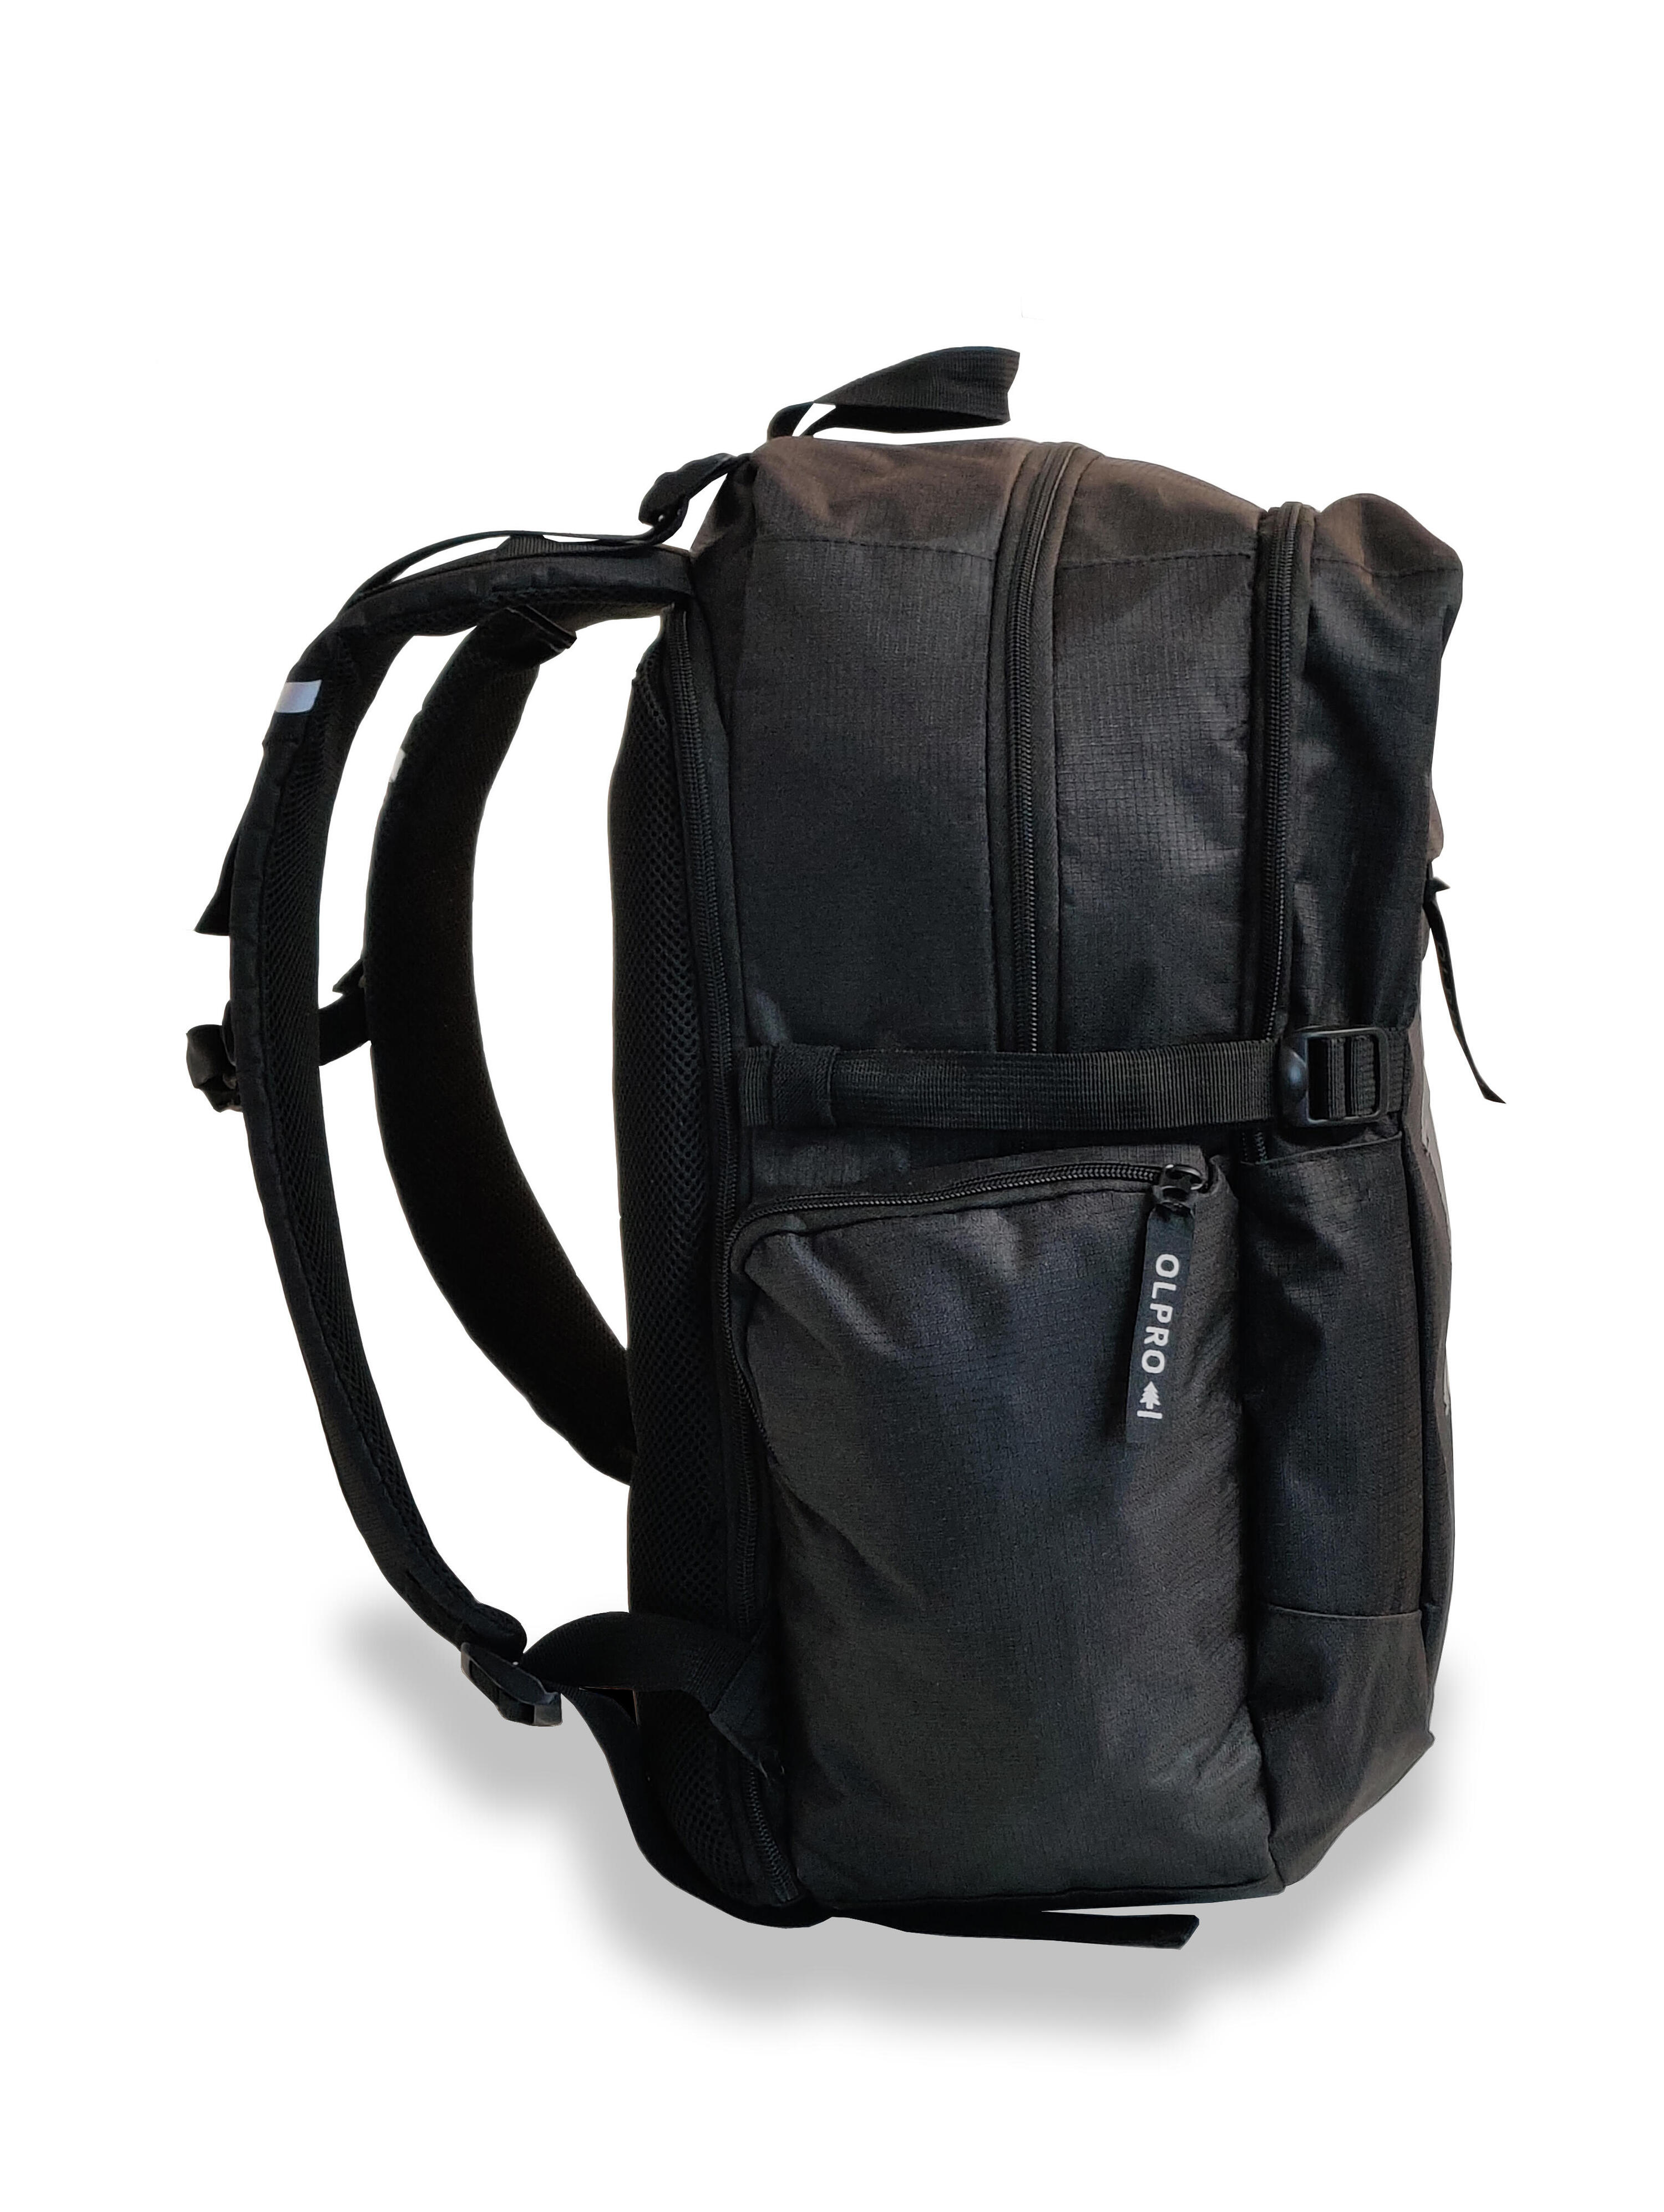 OLPRO 32L Daysac Backpack 4/7